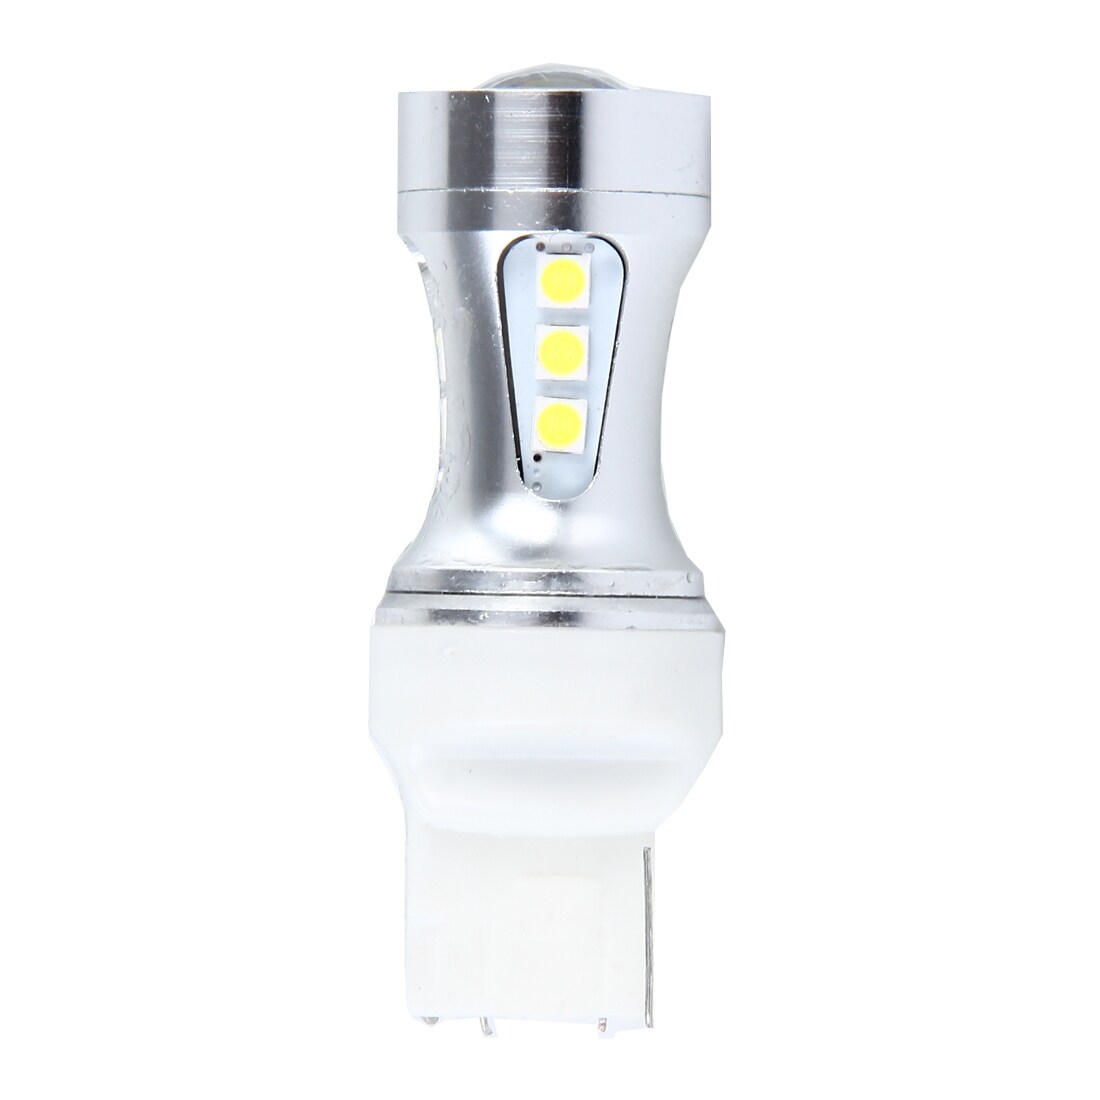 LED lampa 7440 10W 18 SMD-3030 bromsljuslampa / positionslampa